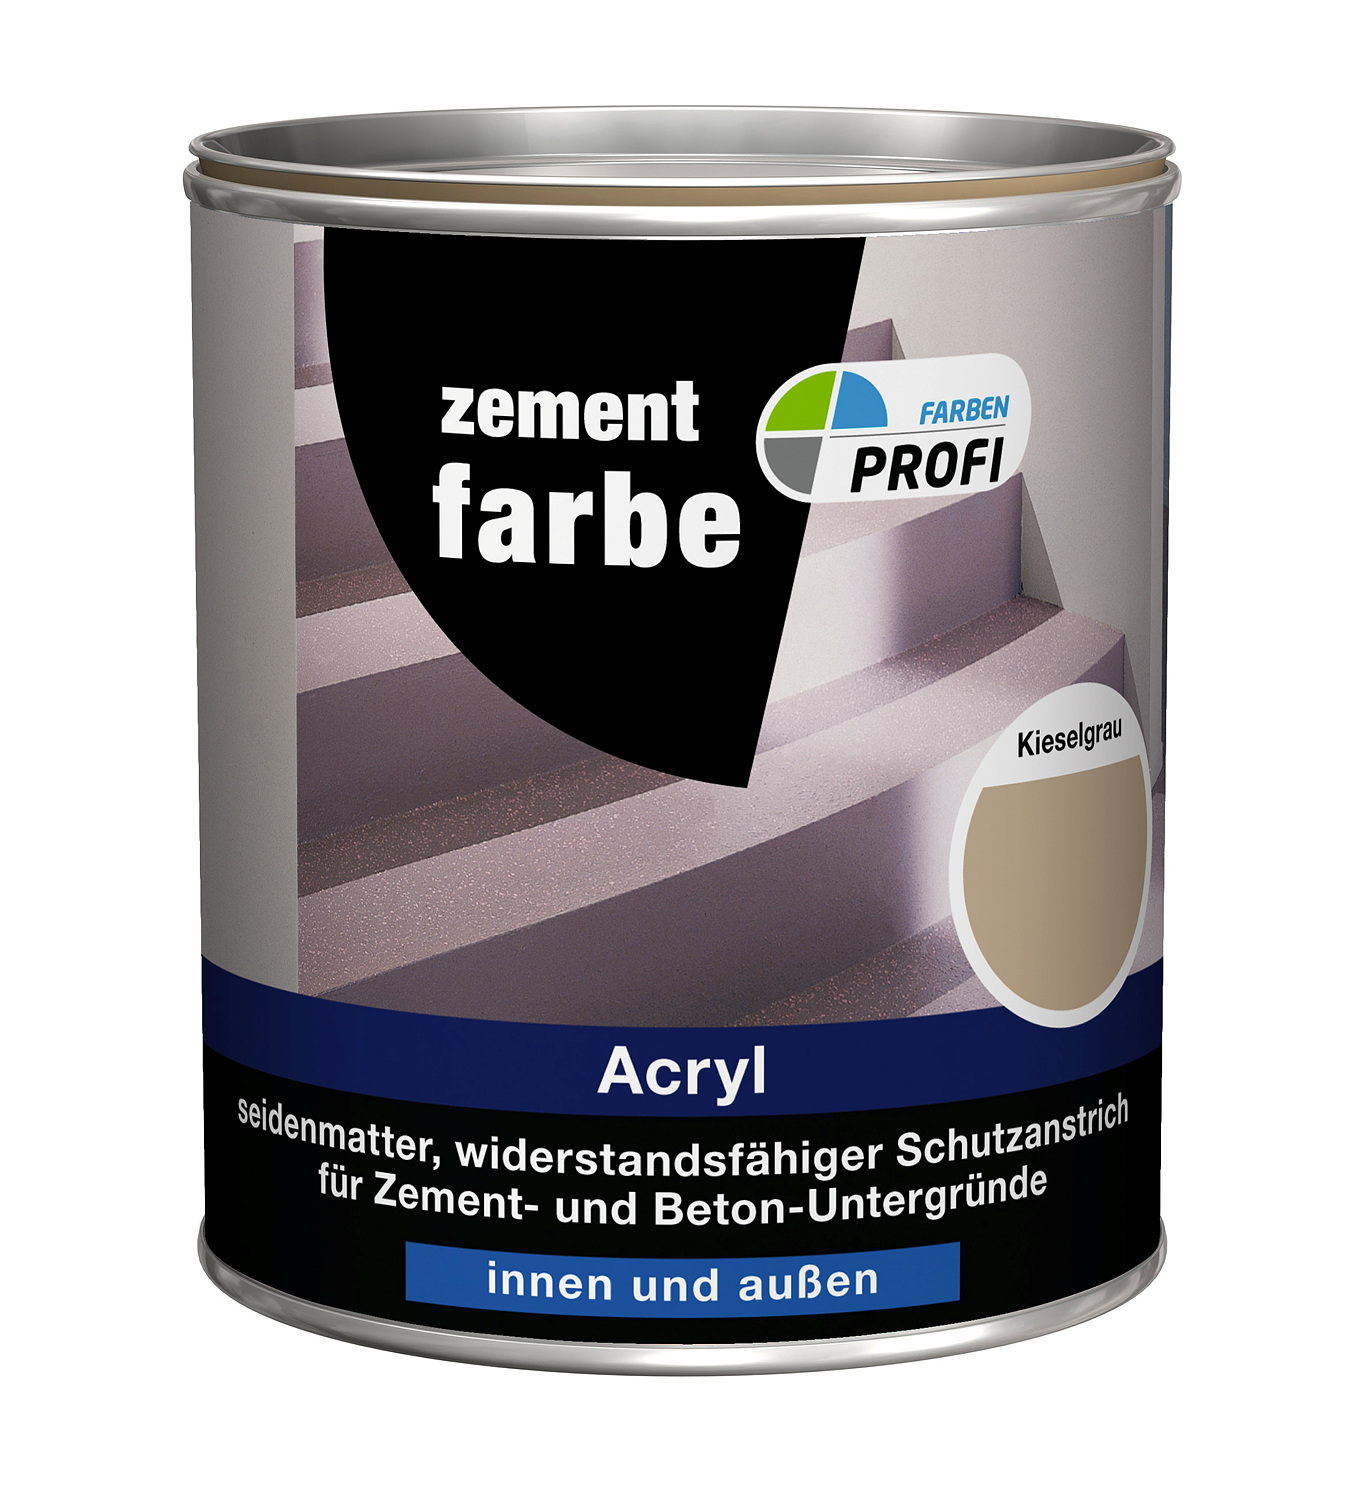 PROFI Acryl Zementfarbe Kieselgrau 750 ml, seidenmatt